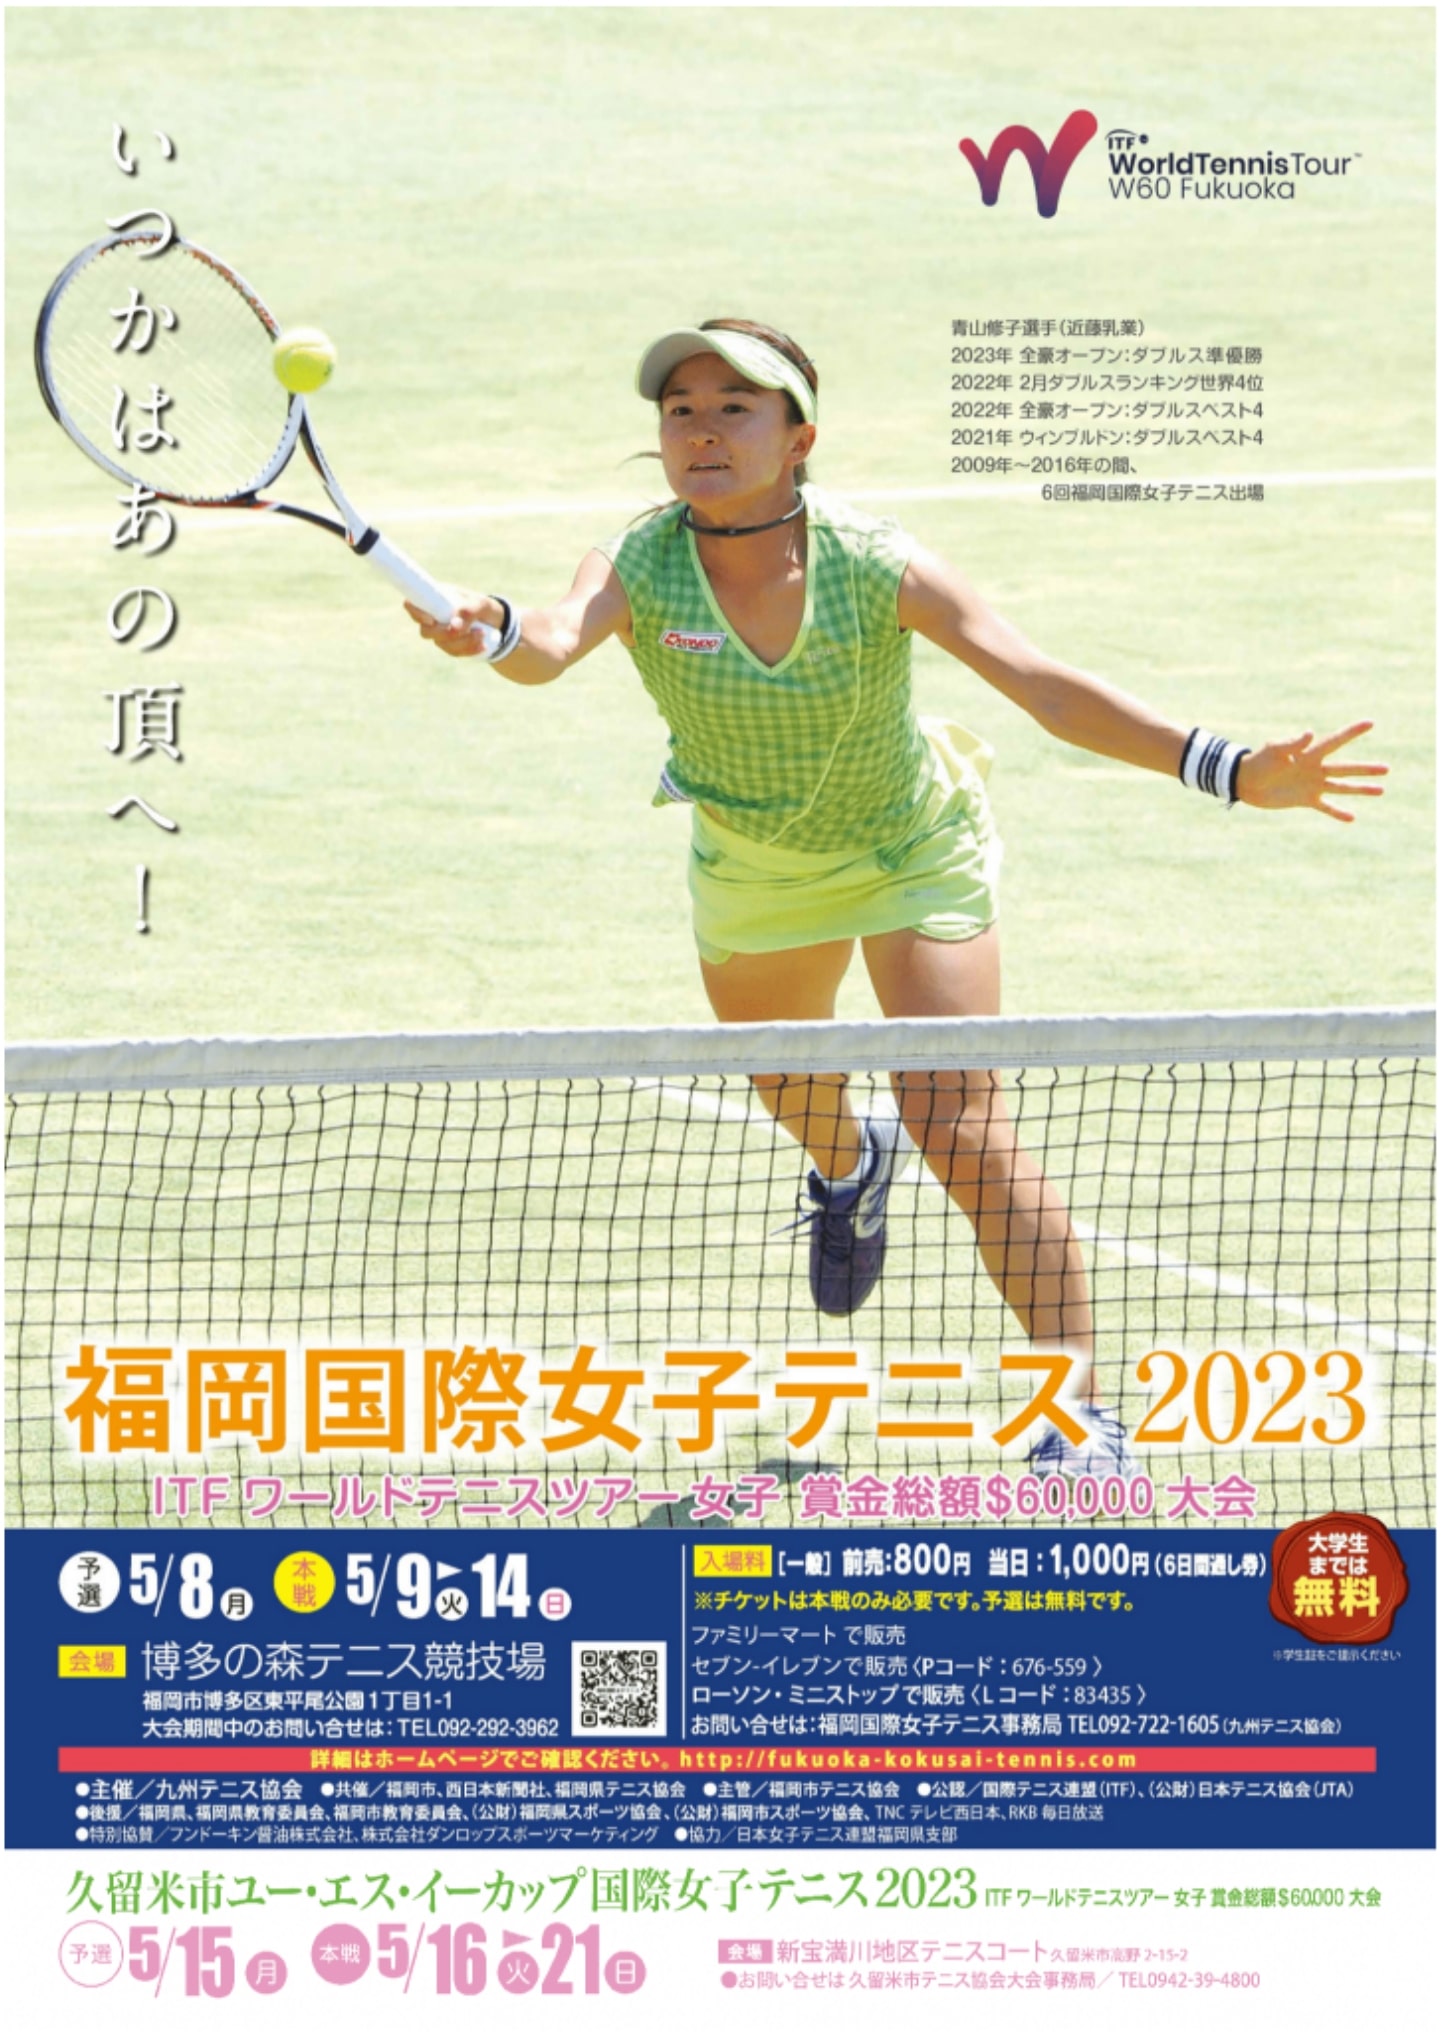 福岡国際女子テニス2023大会概要